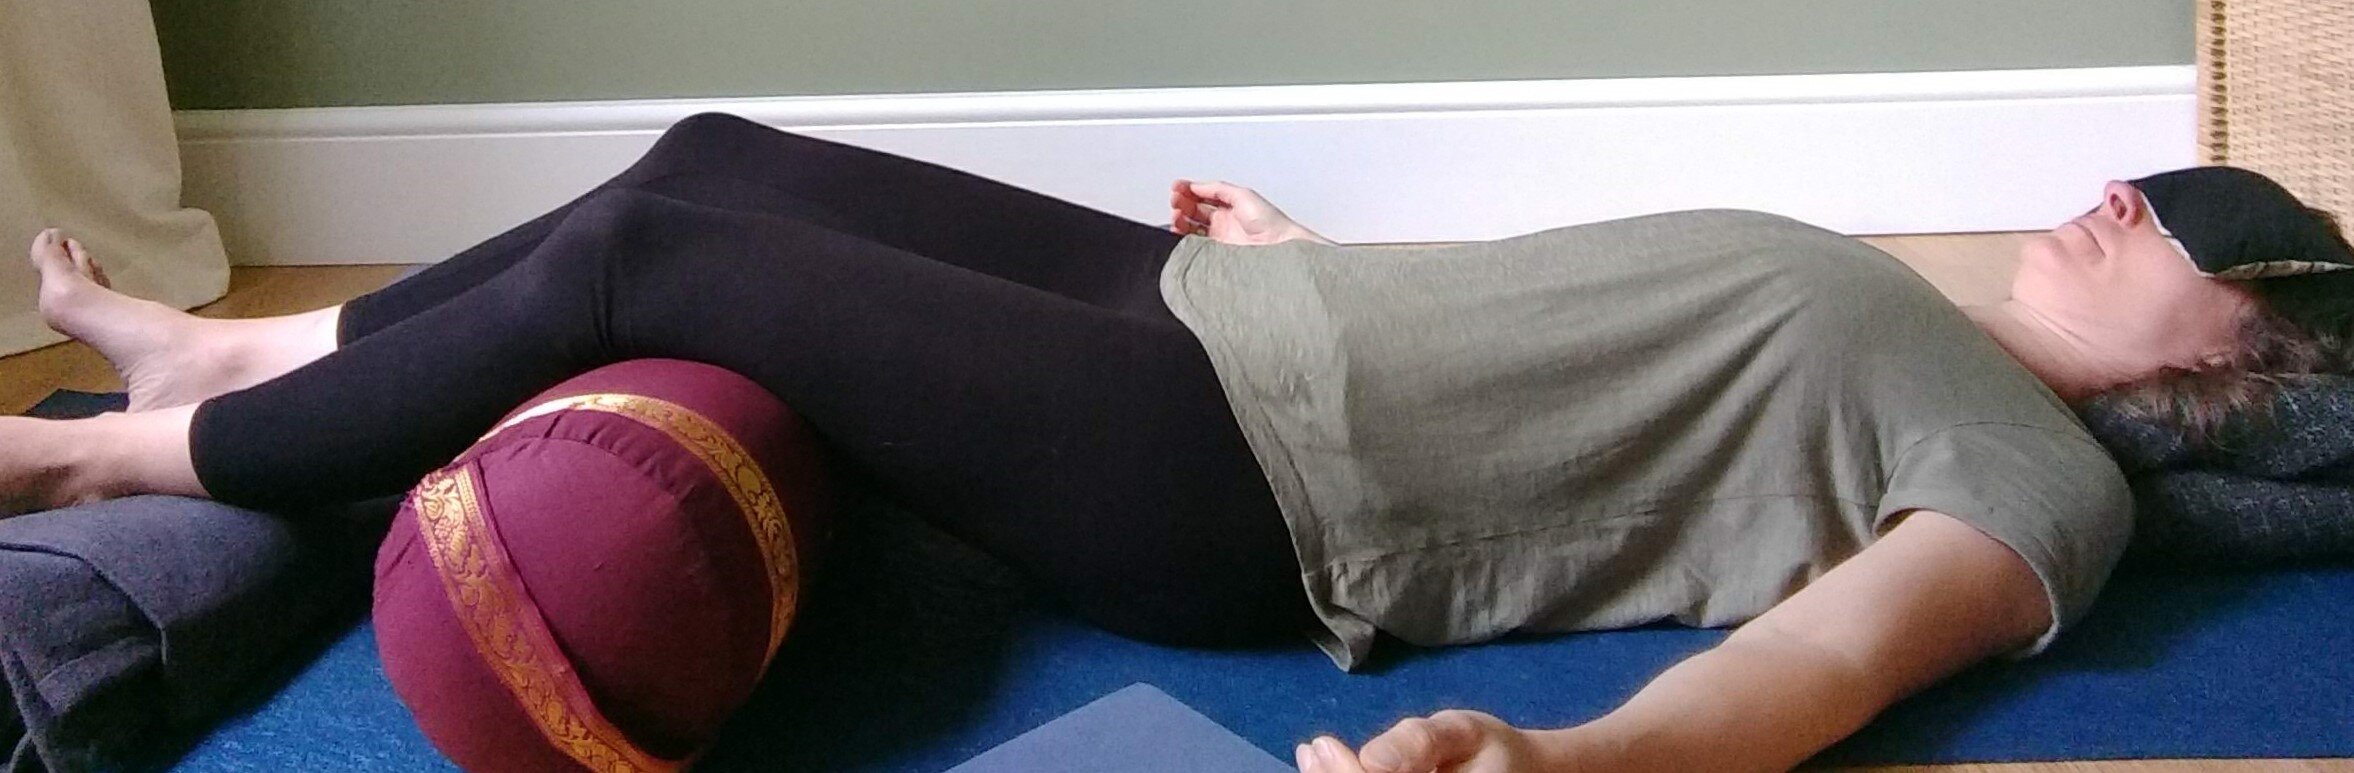 Yoga for Deep Rest - Nidra and Restorative Yoga — Breathing Space Yoga